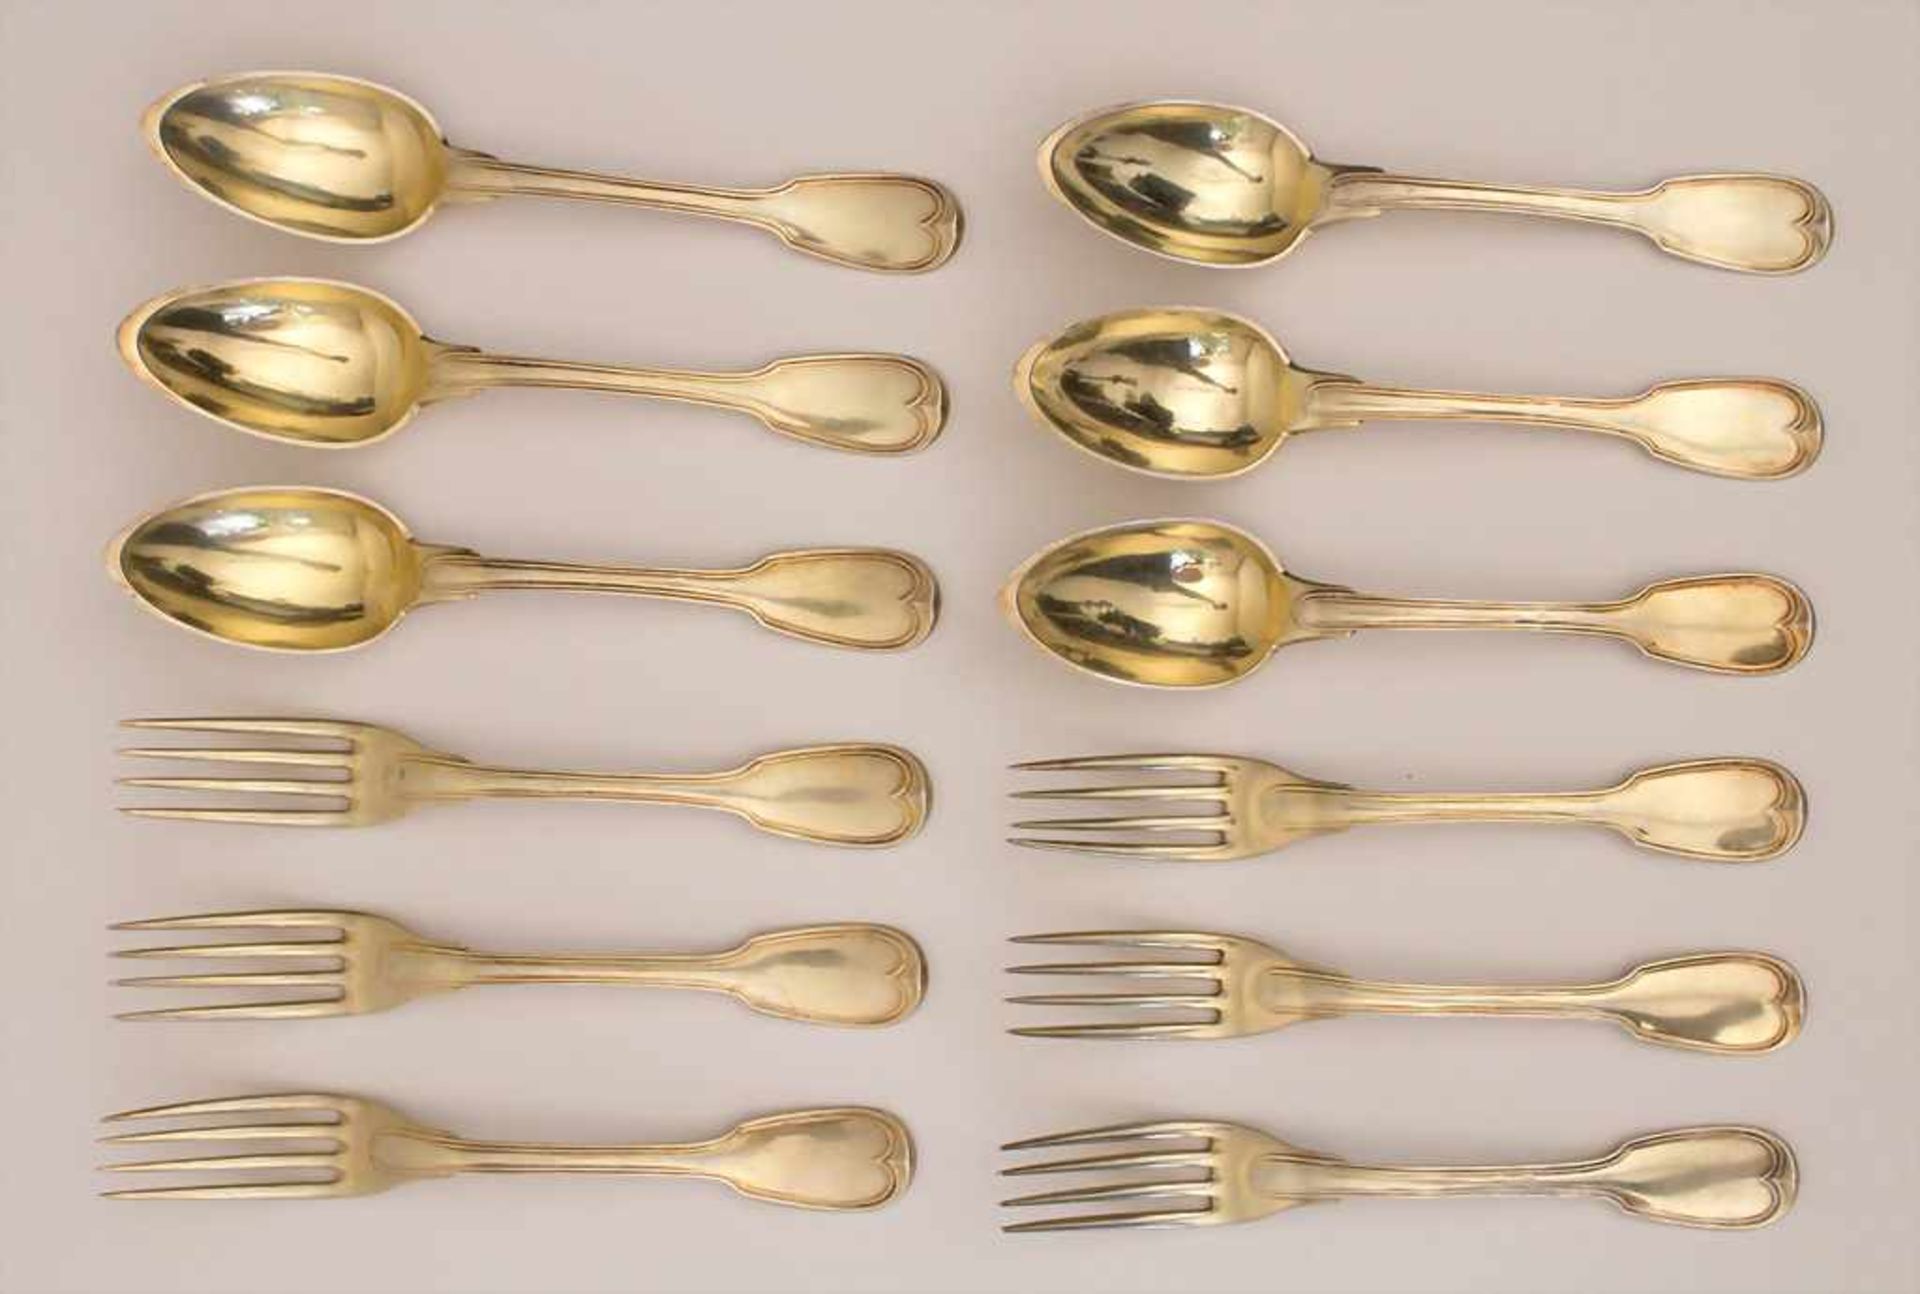 Silberbesteck für 6 Personen / 12 pieces of silver flatware, Paris, 1798-1809Material: Silber 950/